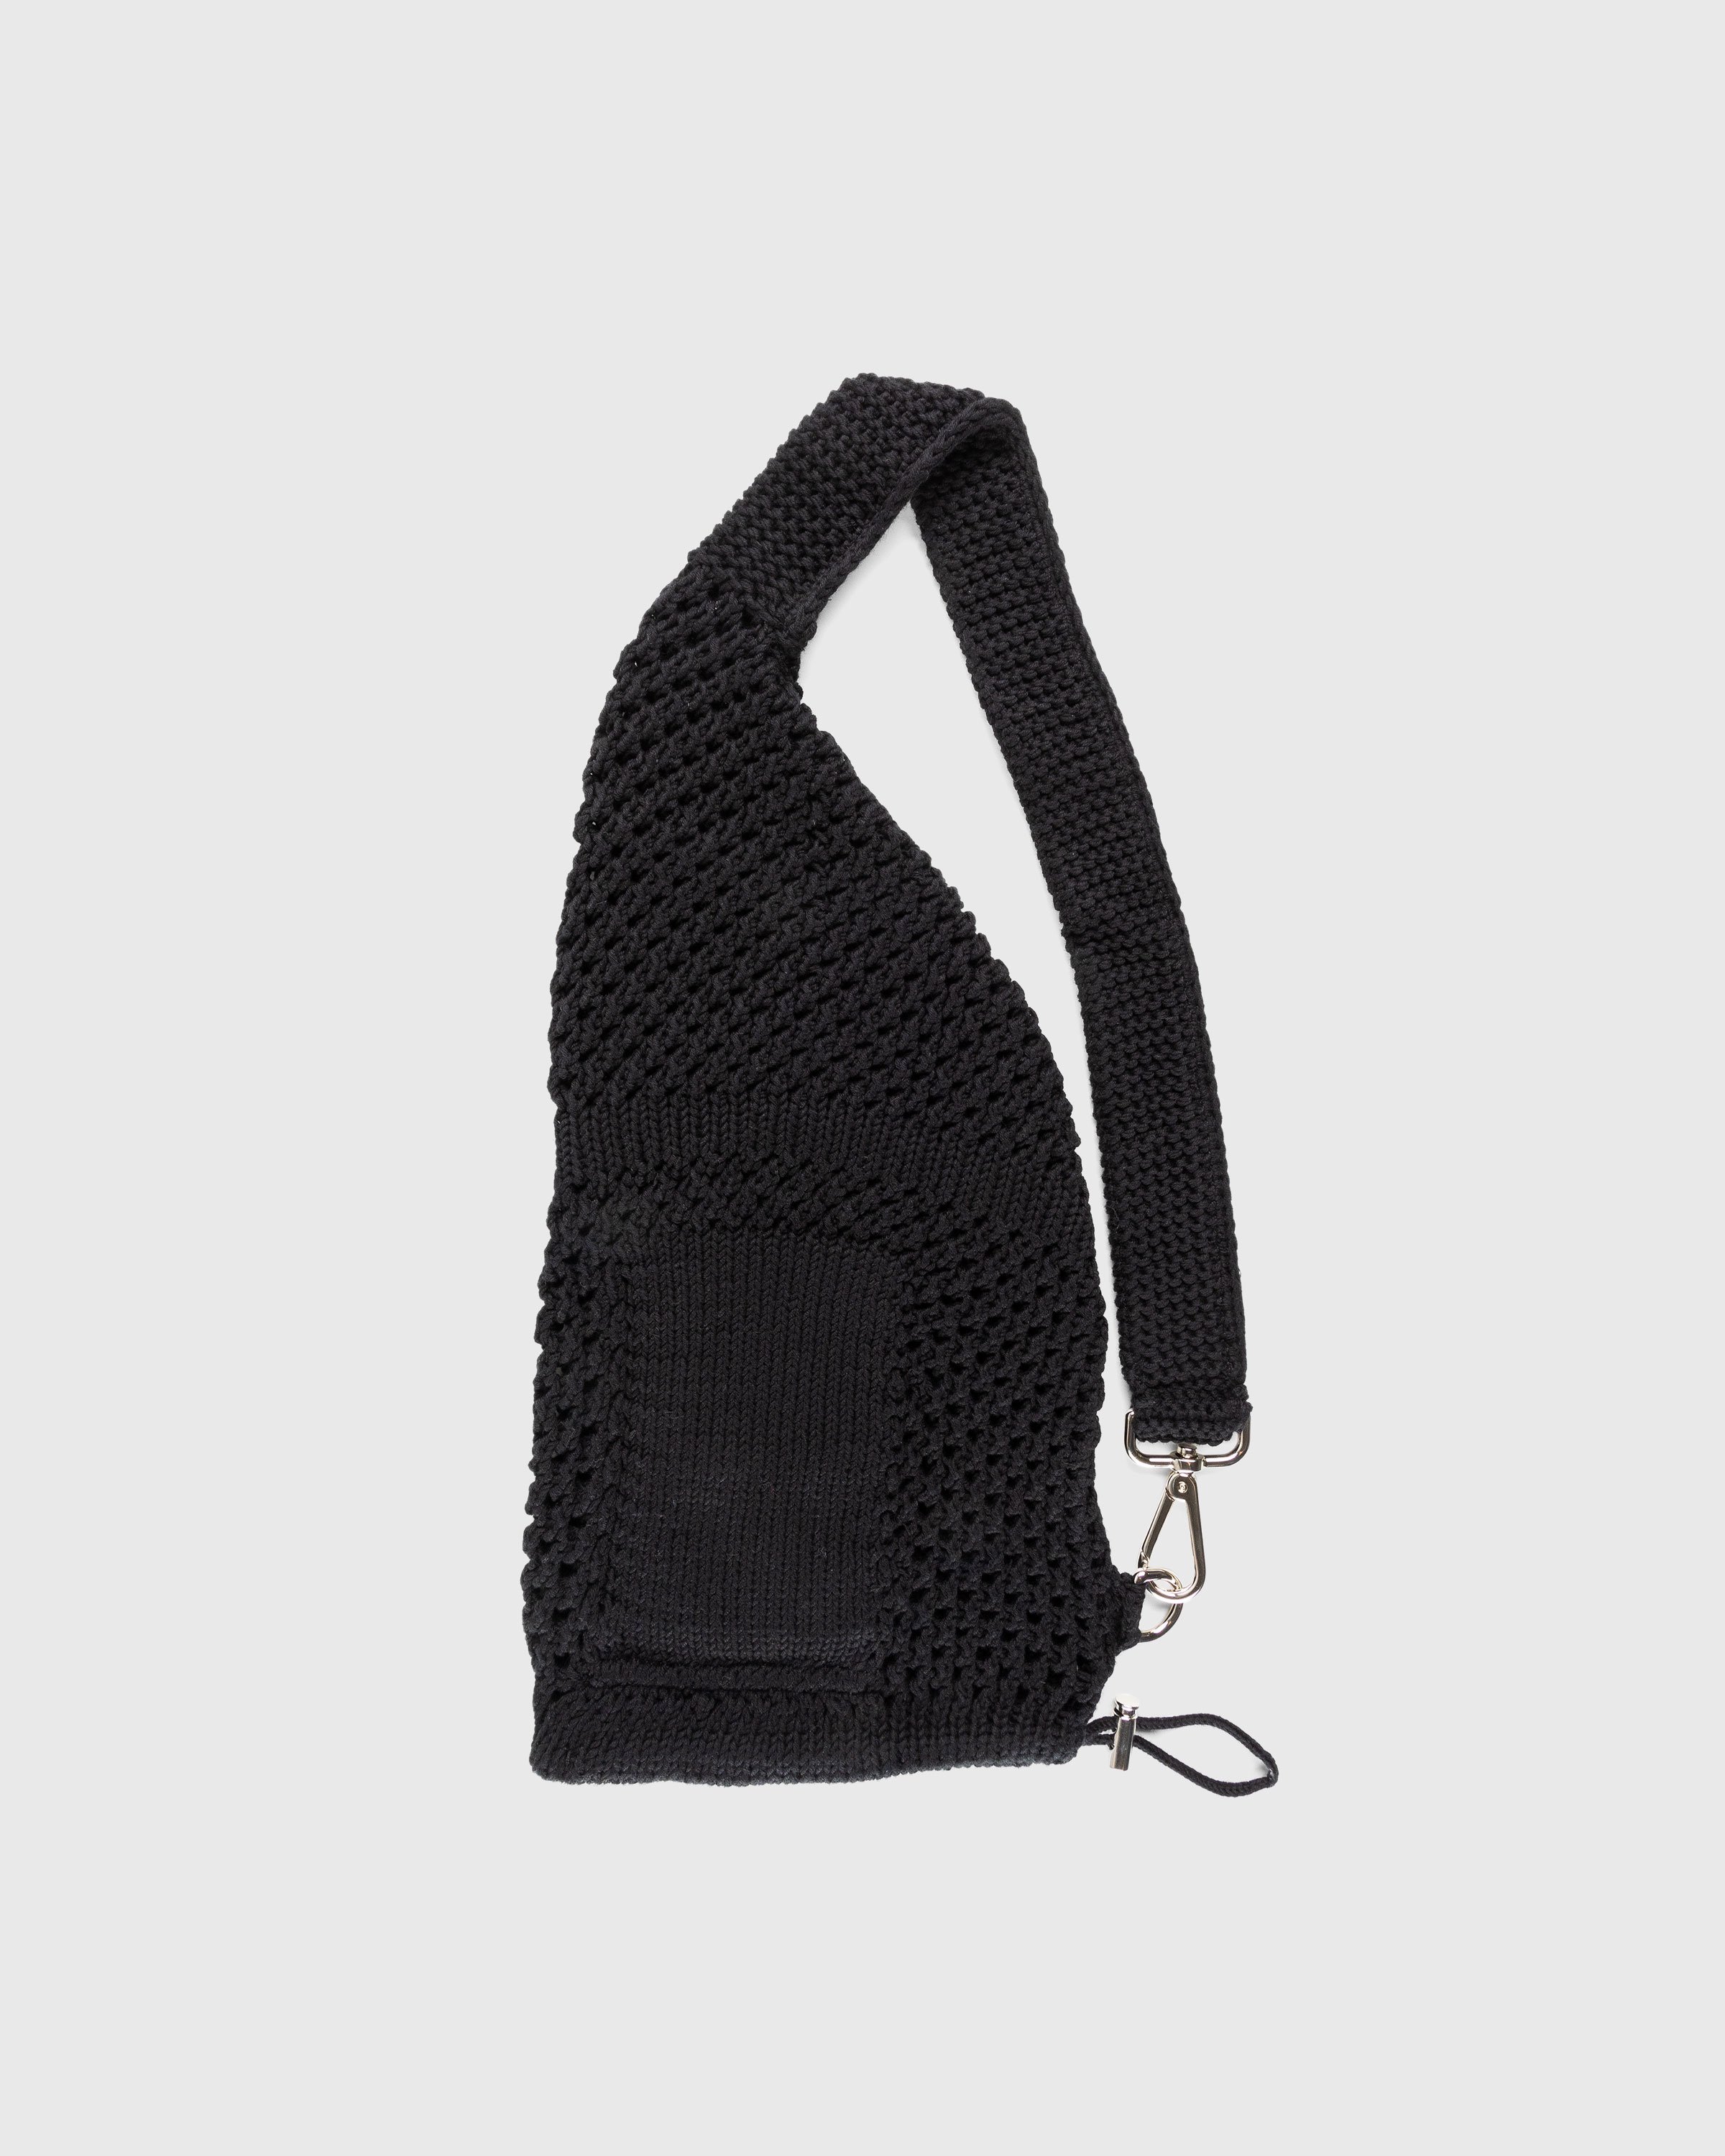 SSU - Mesh Stitch Knitted Bag Black - Accessories - Black - Image 1